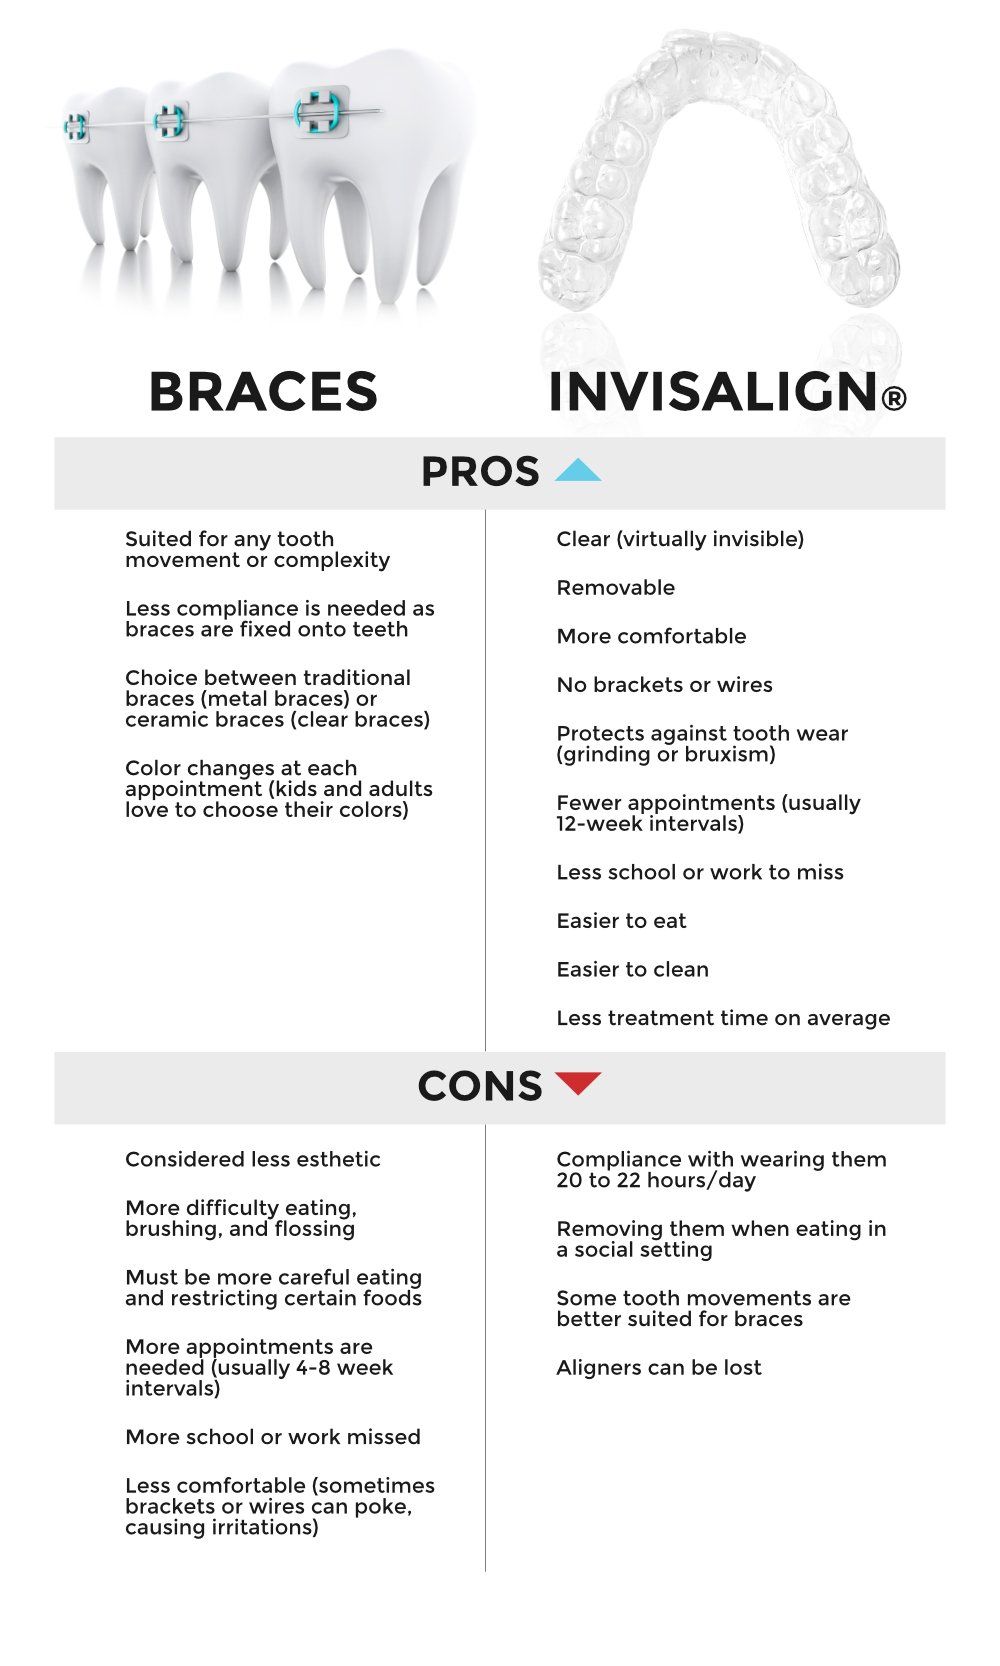 Braces vs Invisalign infographic